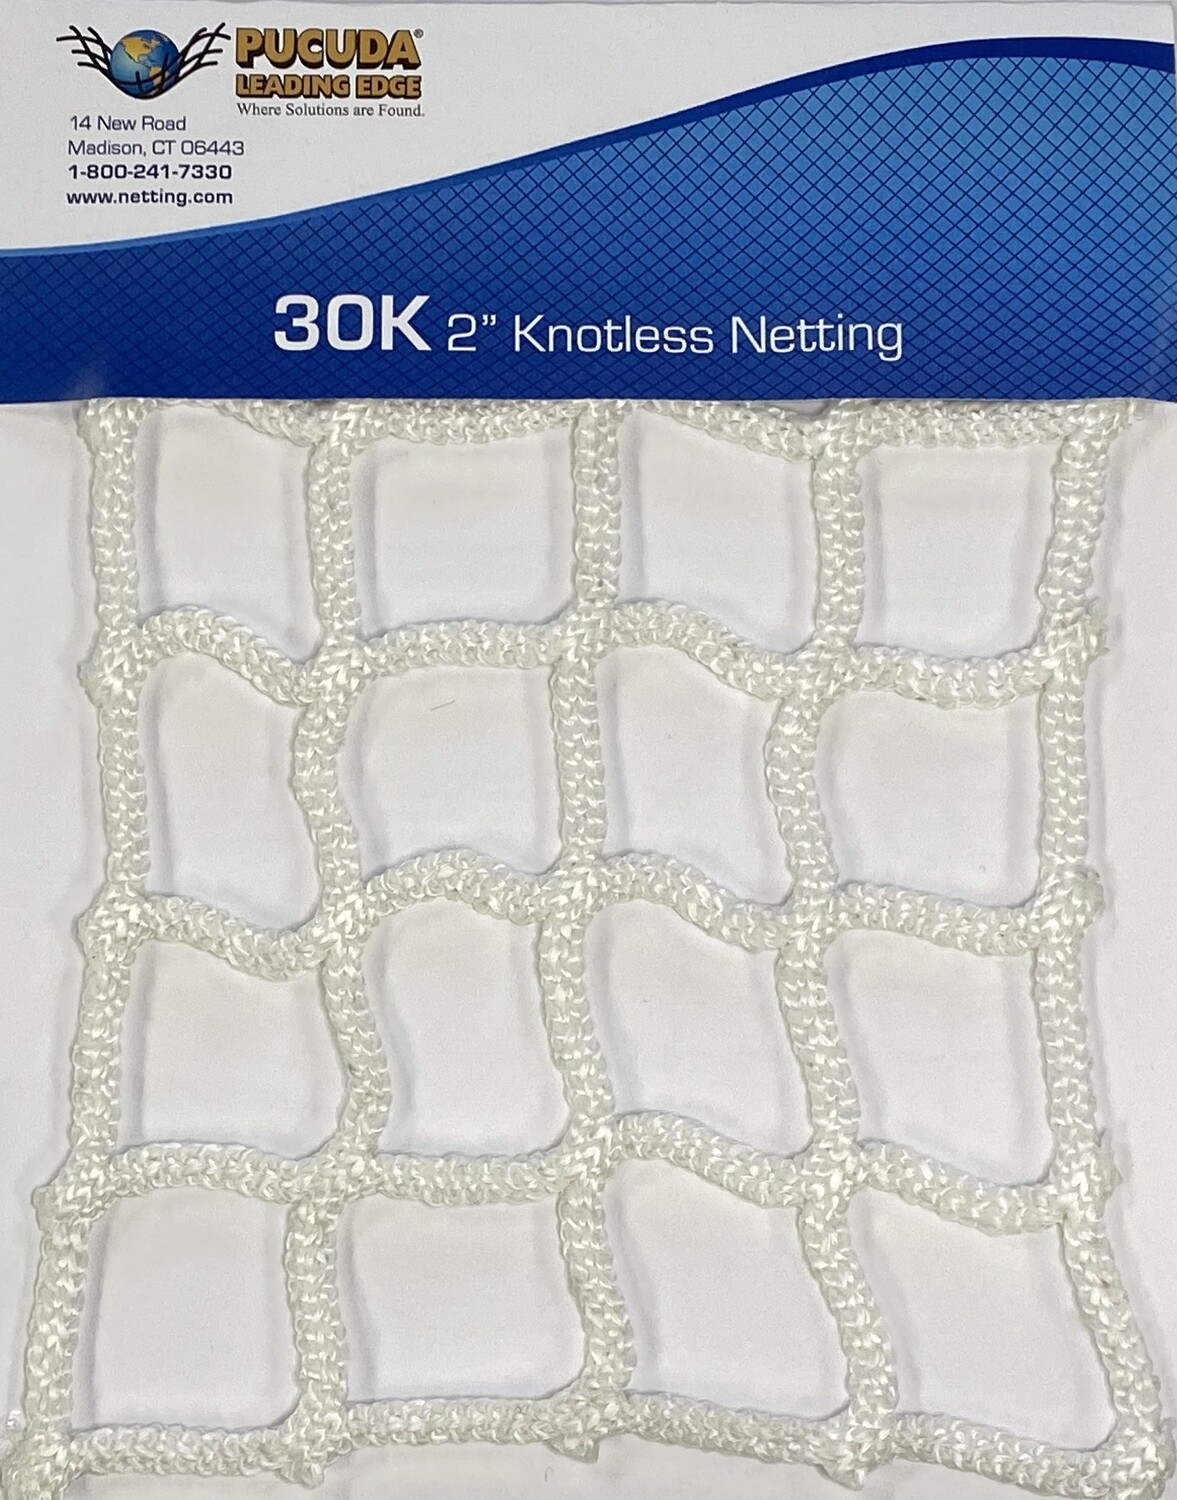 30K 2” Knotless Netting